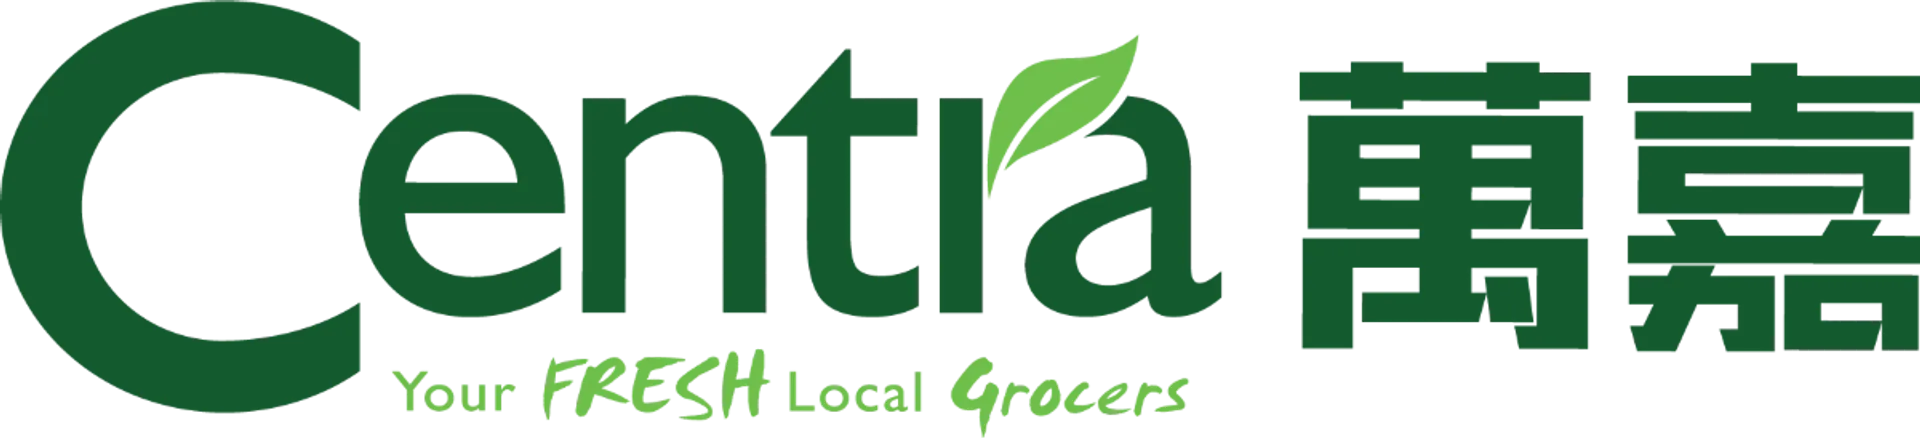 CENTRA FOOD MARKET logo